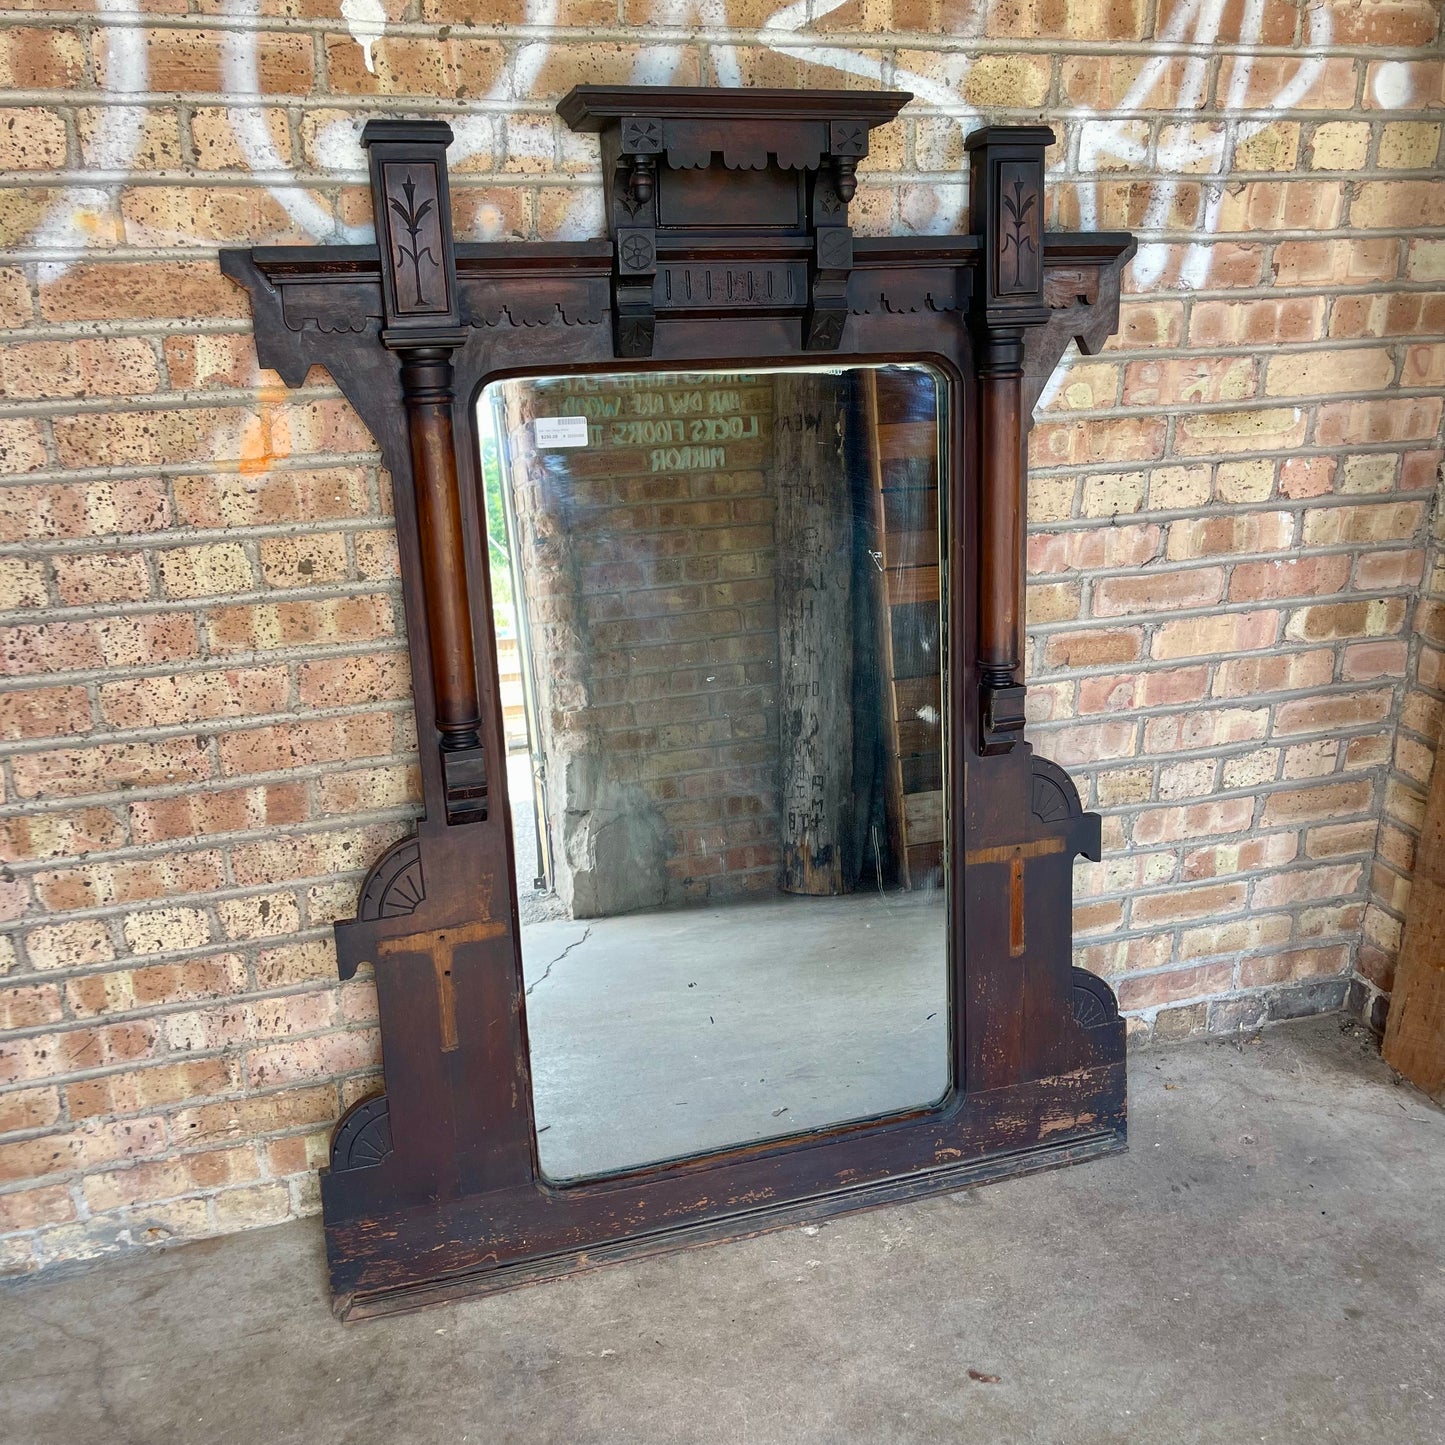 Antique Hall Mirror